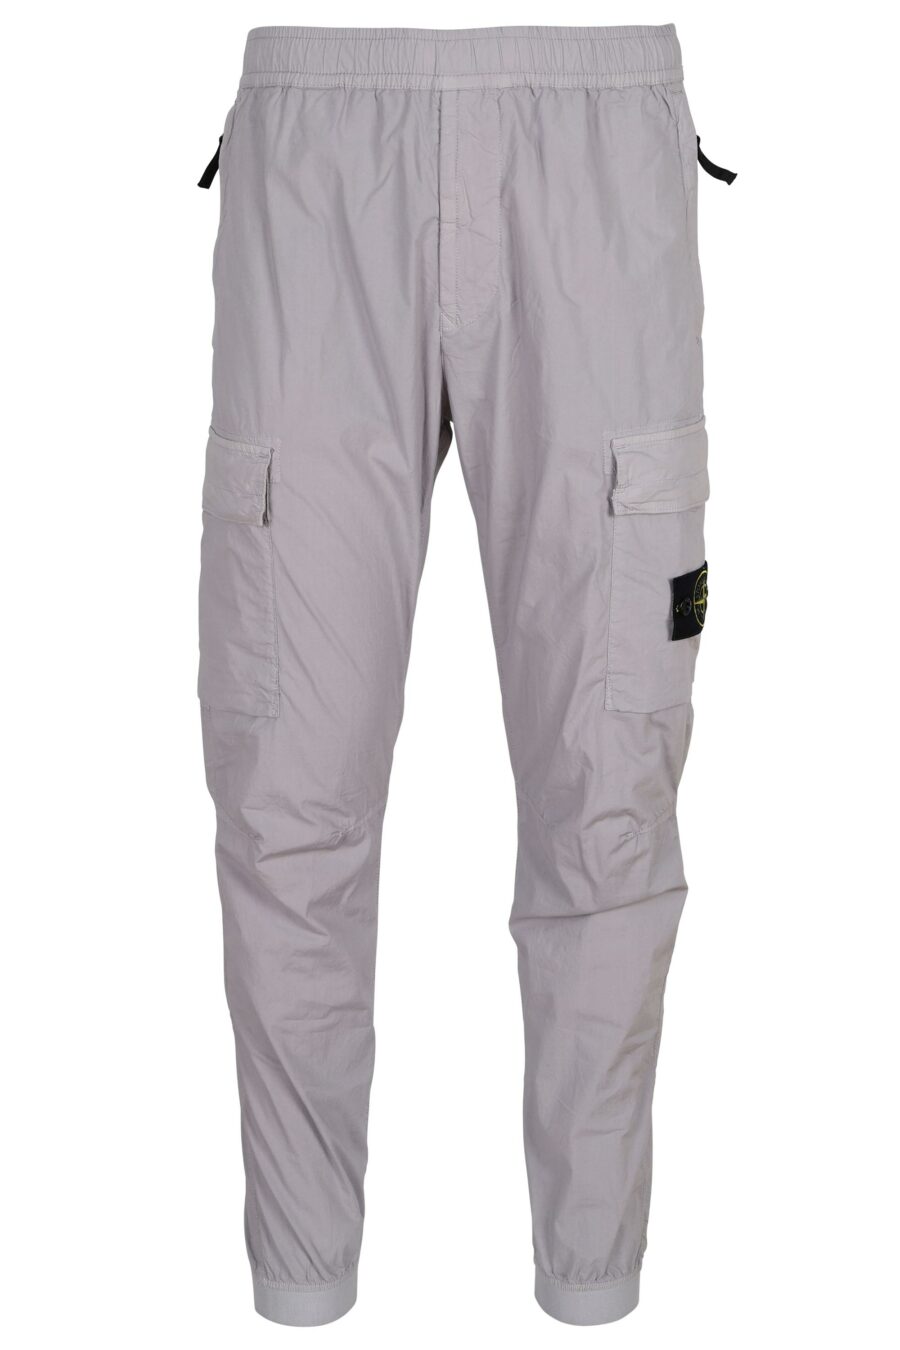 Pantalón lila grisáceo "tapered" con logo parche brújula - 8052572926846